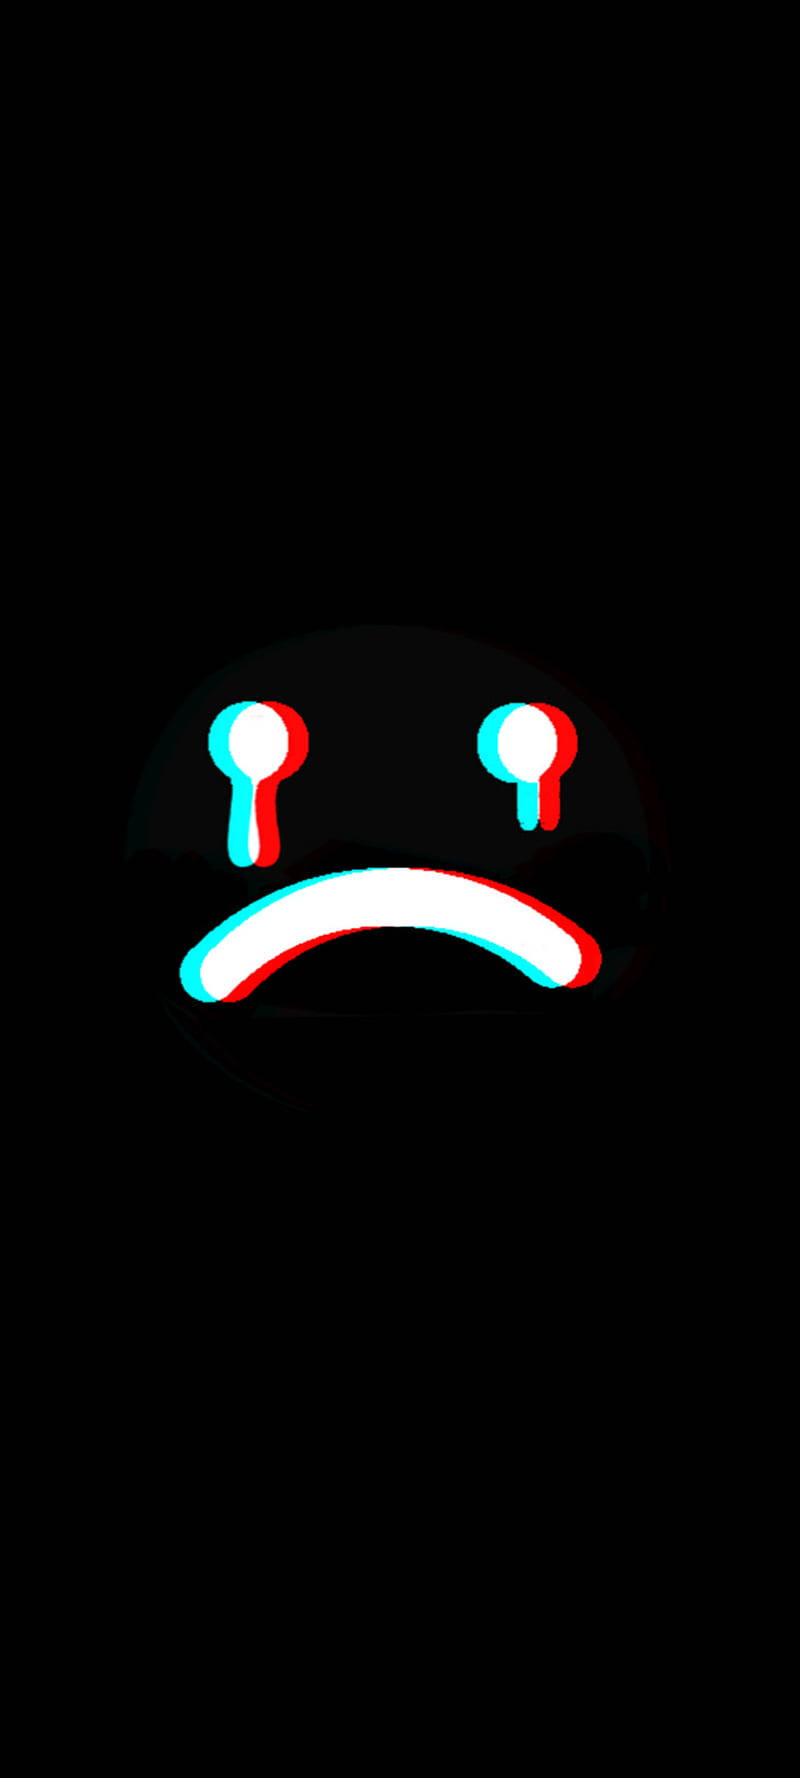 Sad Emoji Face With Tears Background